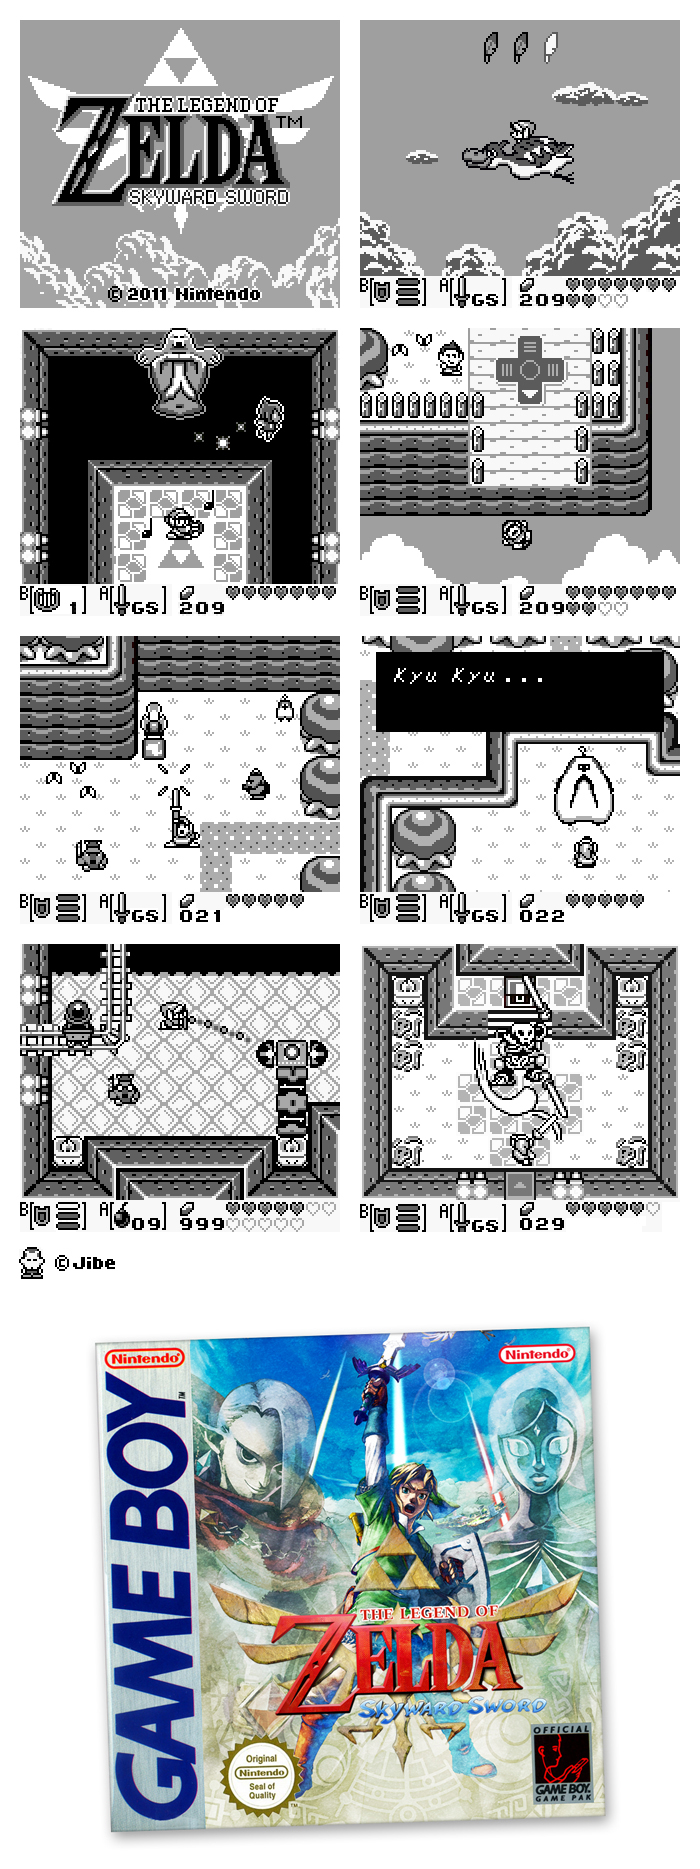 Zelda Skyward Sword sur Game Boy